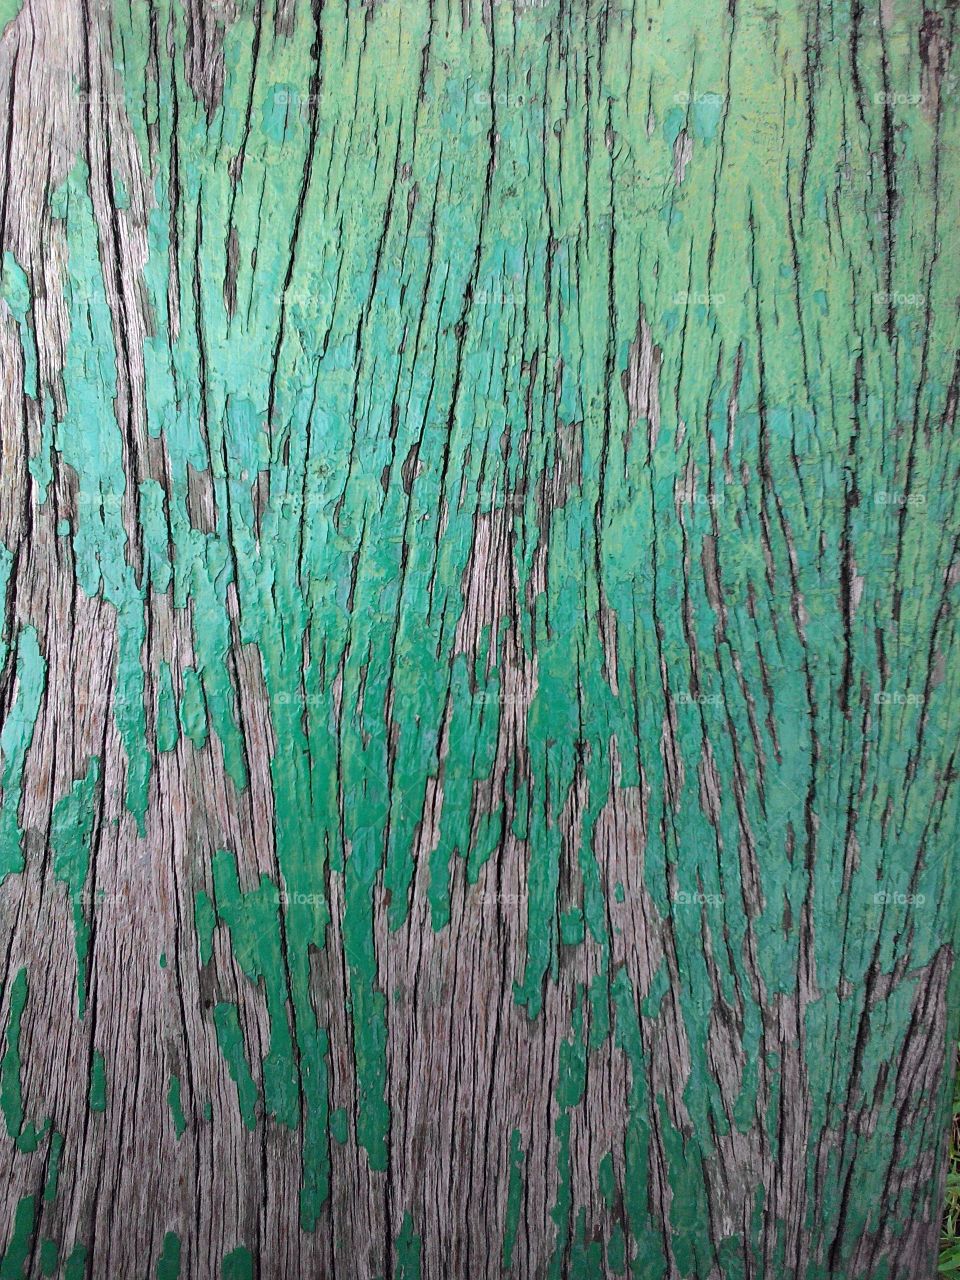 texture. texture wood 